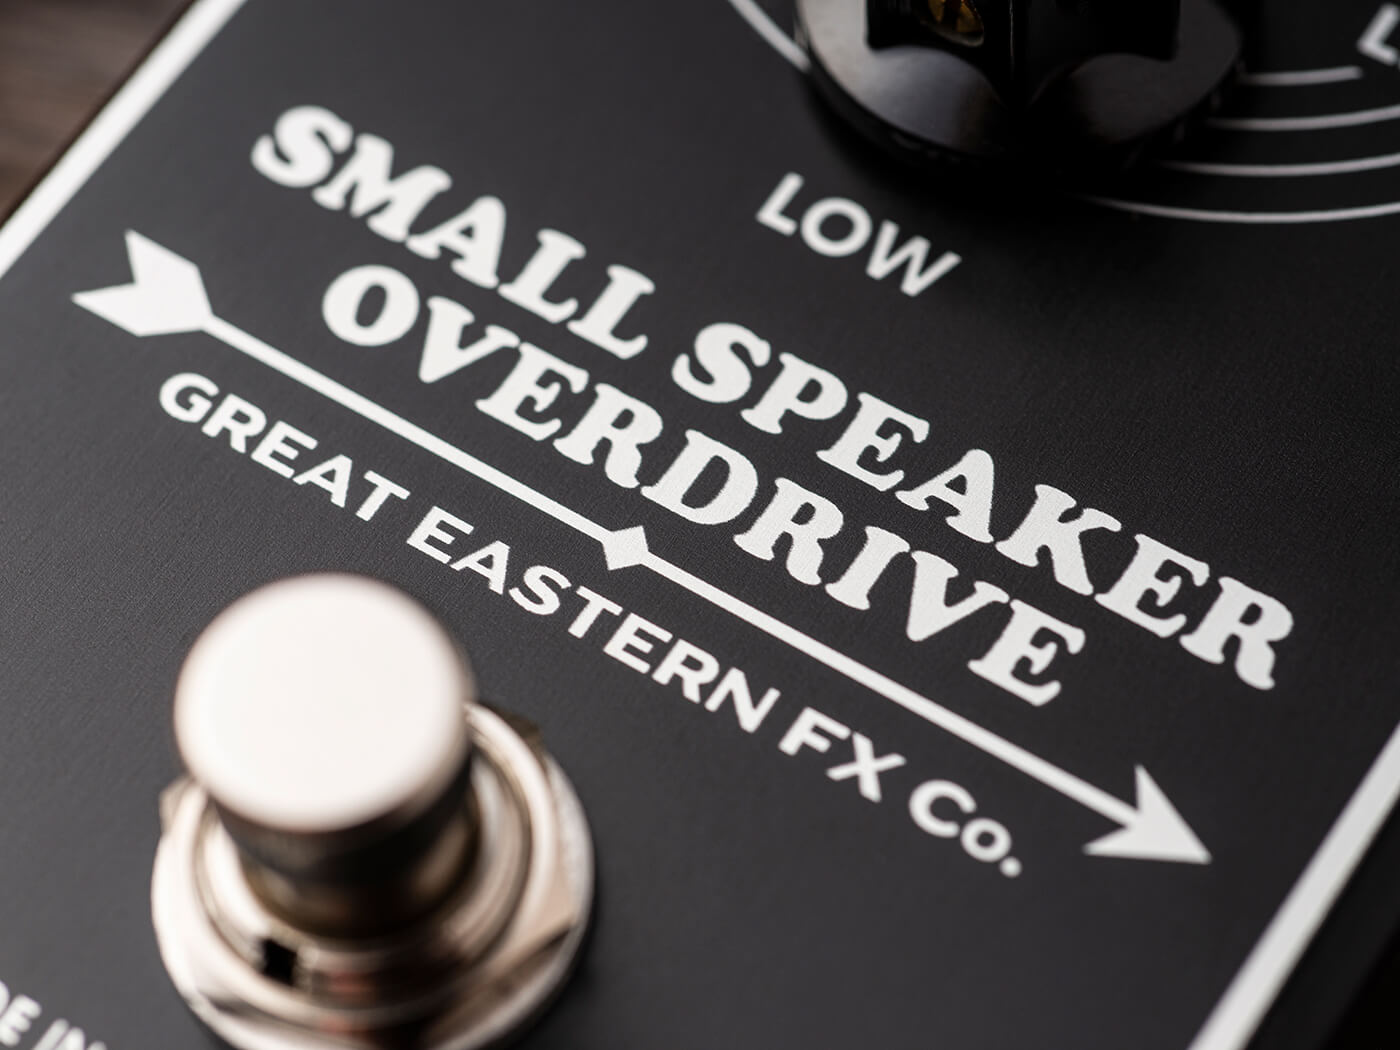 Great Eastern FX Co. Small Speaker Overdrive